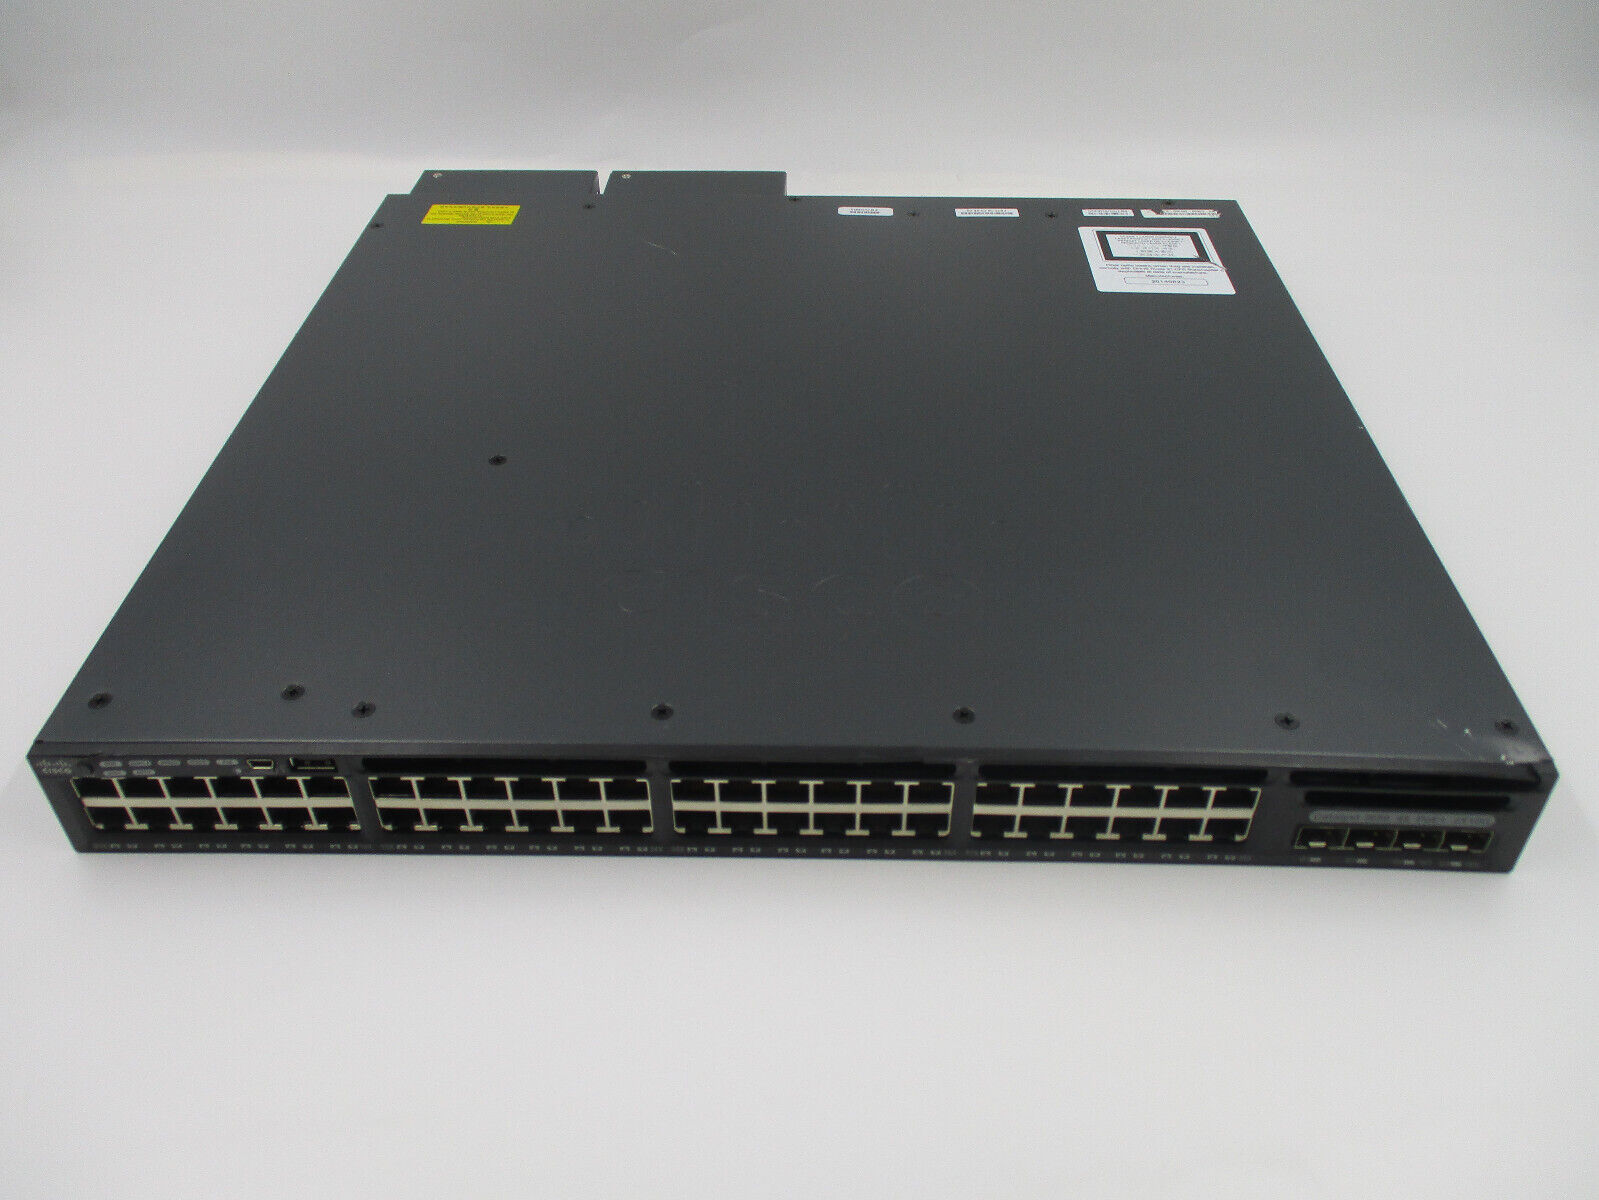 Cisco Catalyst 3650 48 PoE+ 2X10G Dual 1025W PSU Gigabit Ethernet Switch Tested